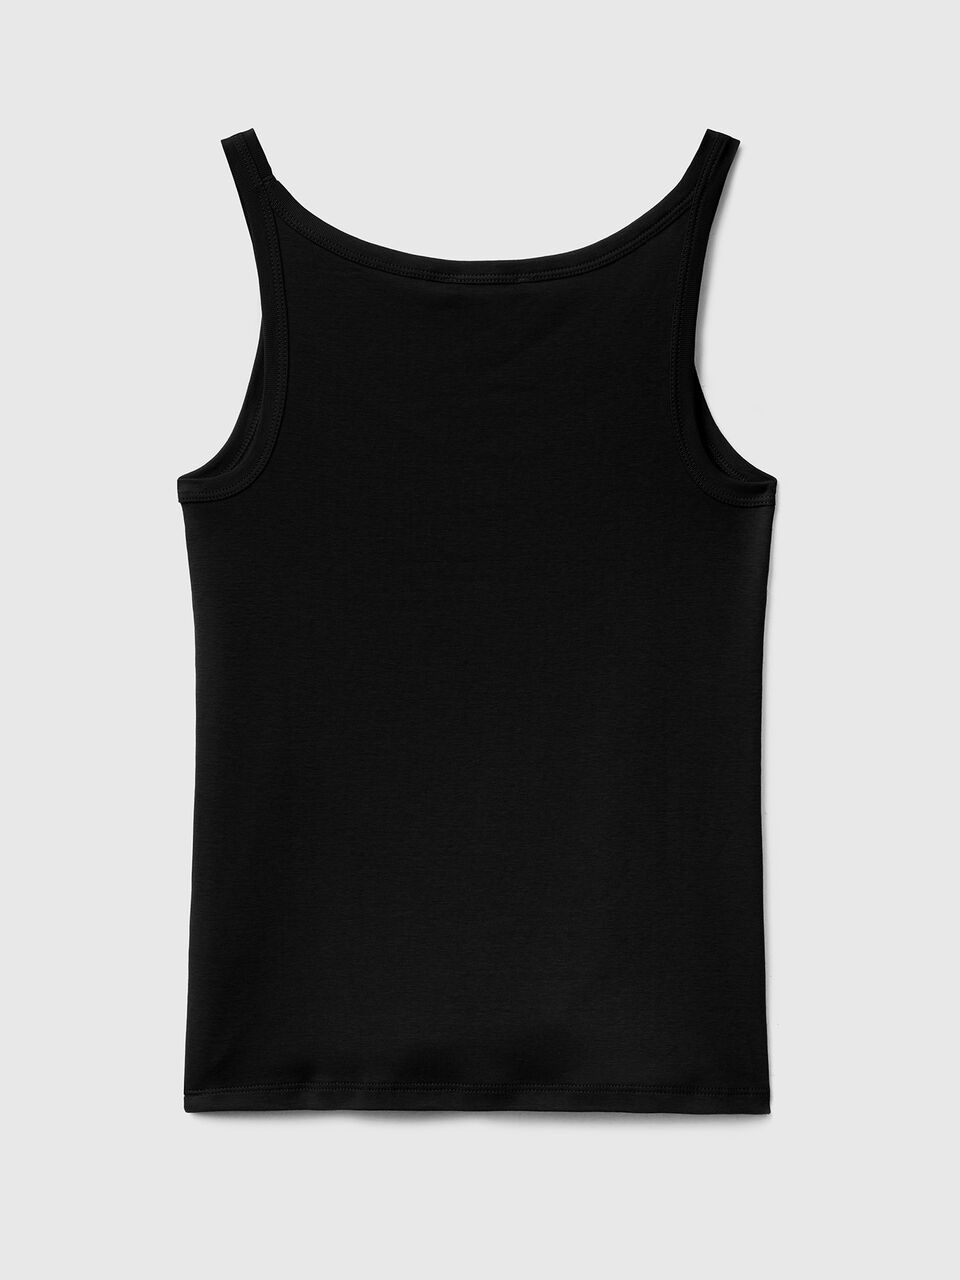 BQTQ 5 Pcs Basic Tank Tops for Women Undershirt Tank Top Sleeveless Under  Shirts, Black, White, Large : : Fashion